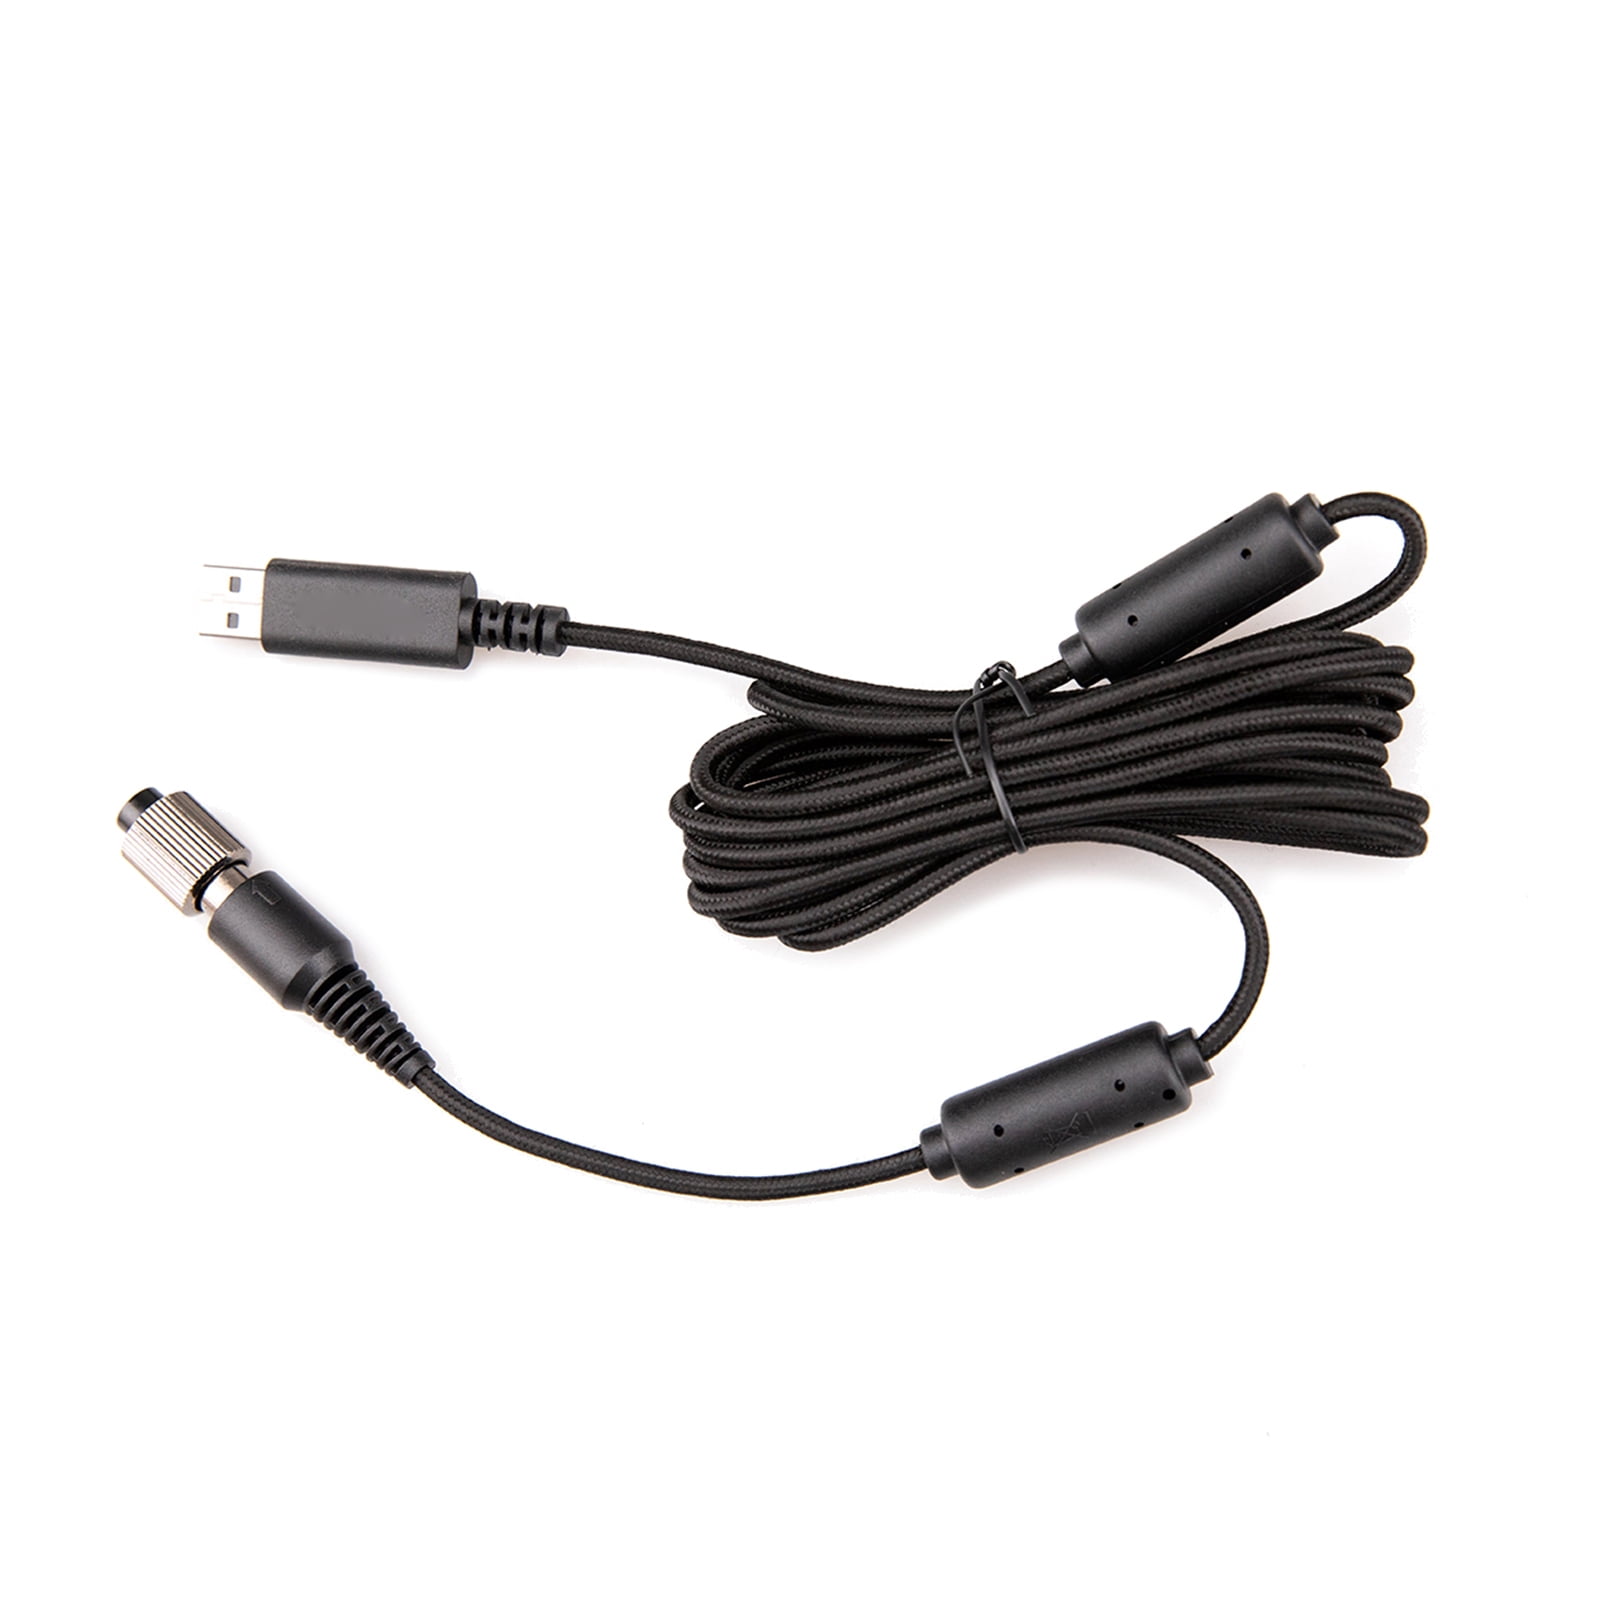 Replacement Braided USB Cable Razer Evo Stick - Walmart.com